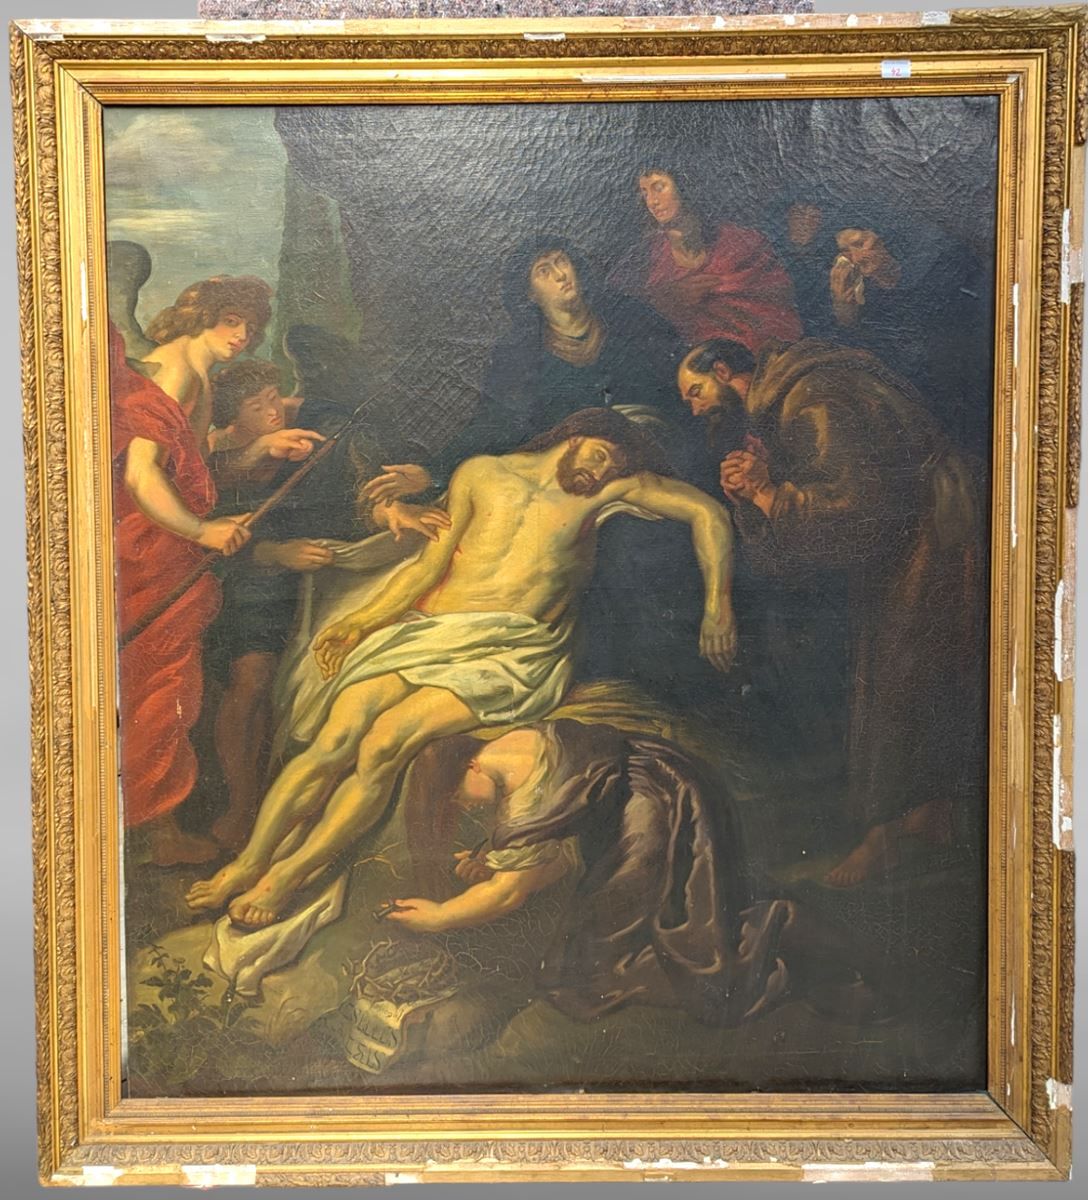 Null Óleo sobre lienzo siglo XIX - sepultura - 110x125 cm sin enmarcar